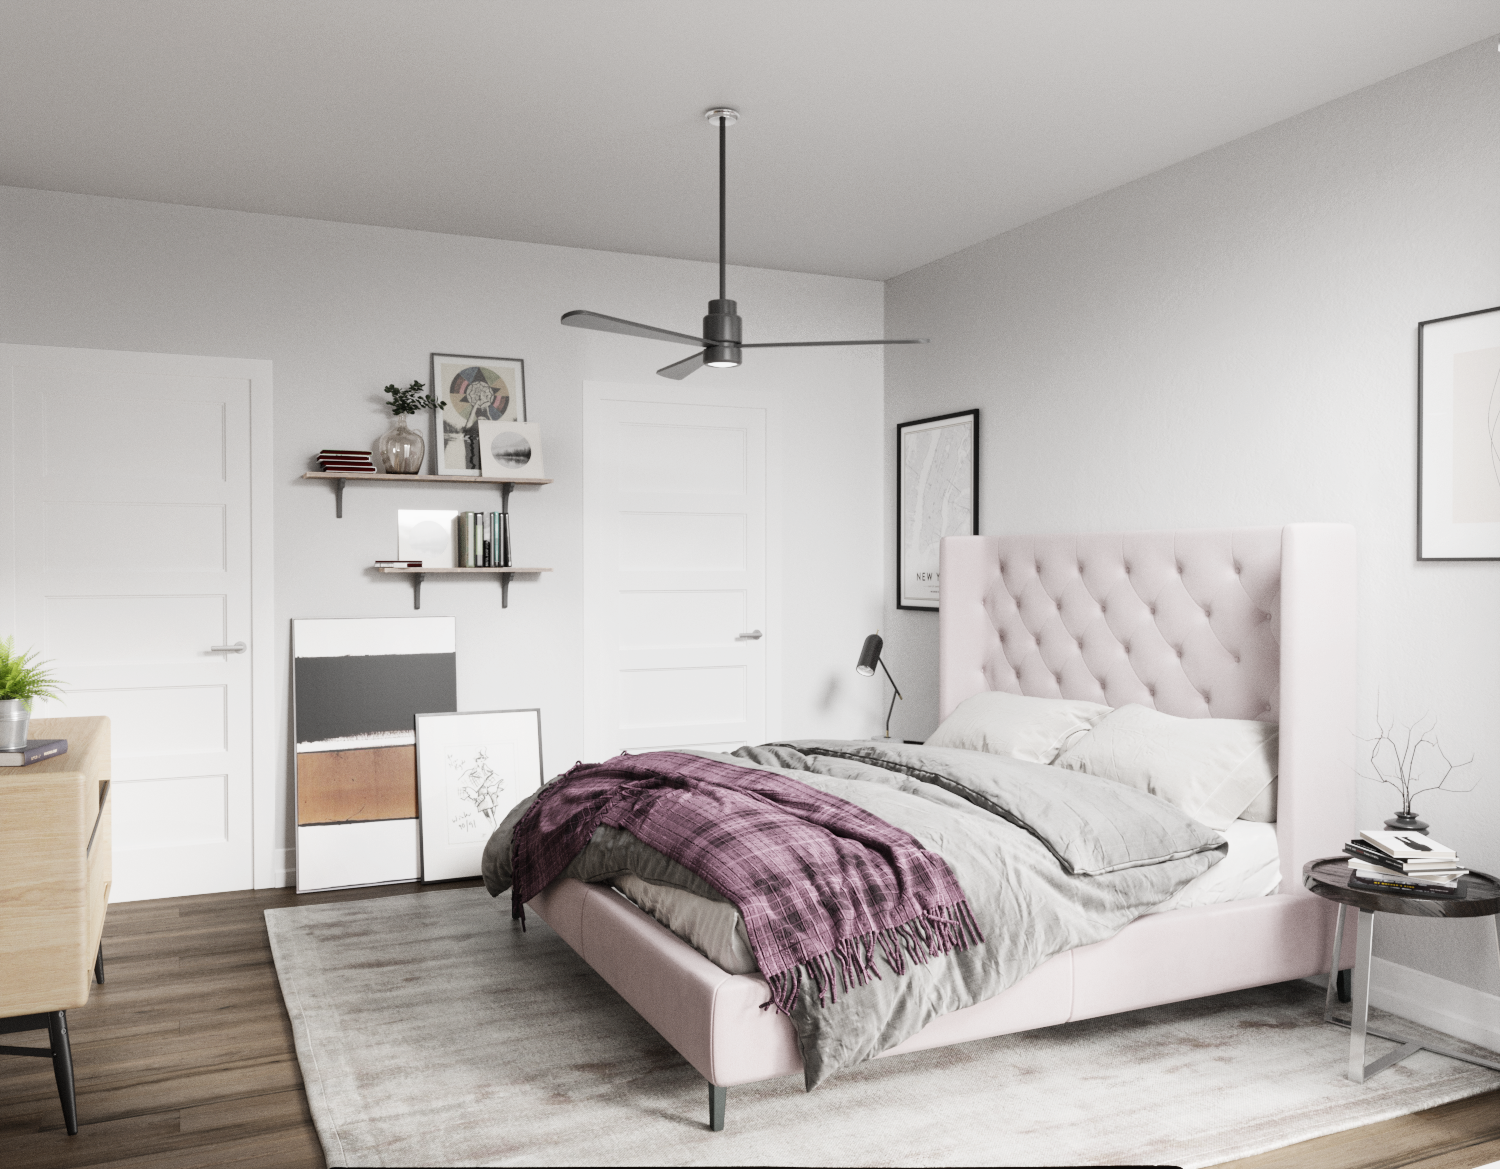 Interior 3D rendering of an apartment bedroom